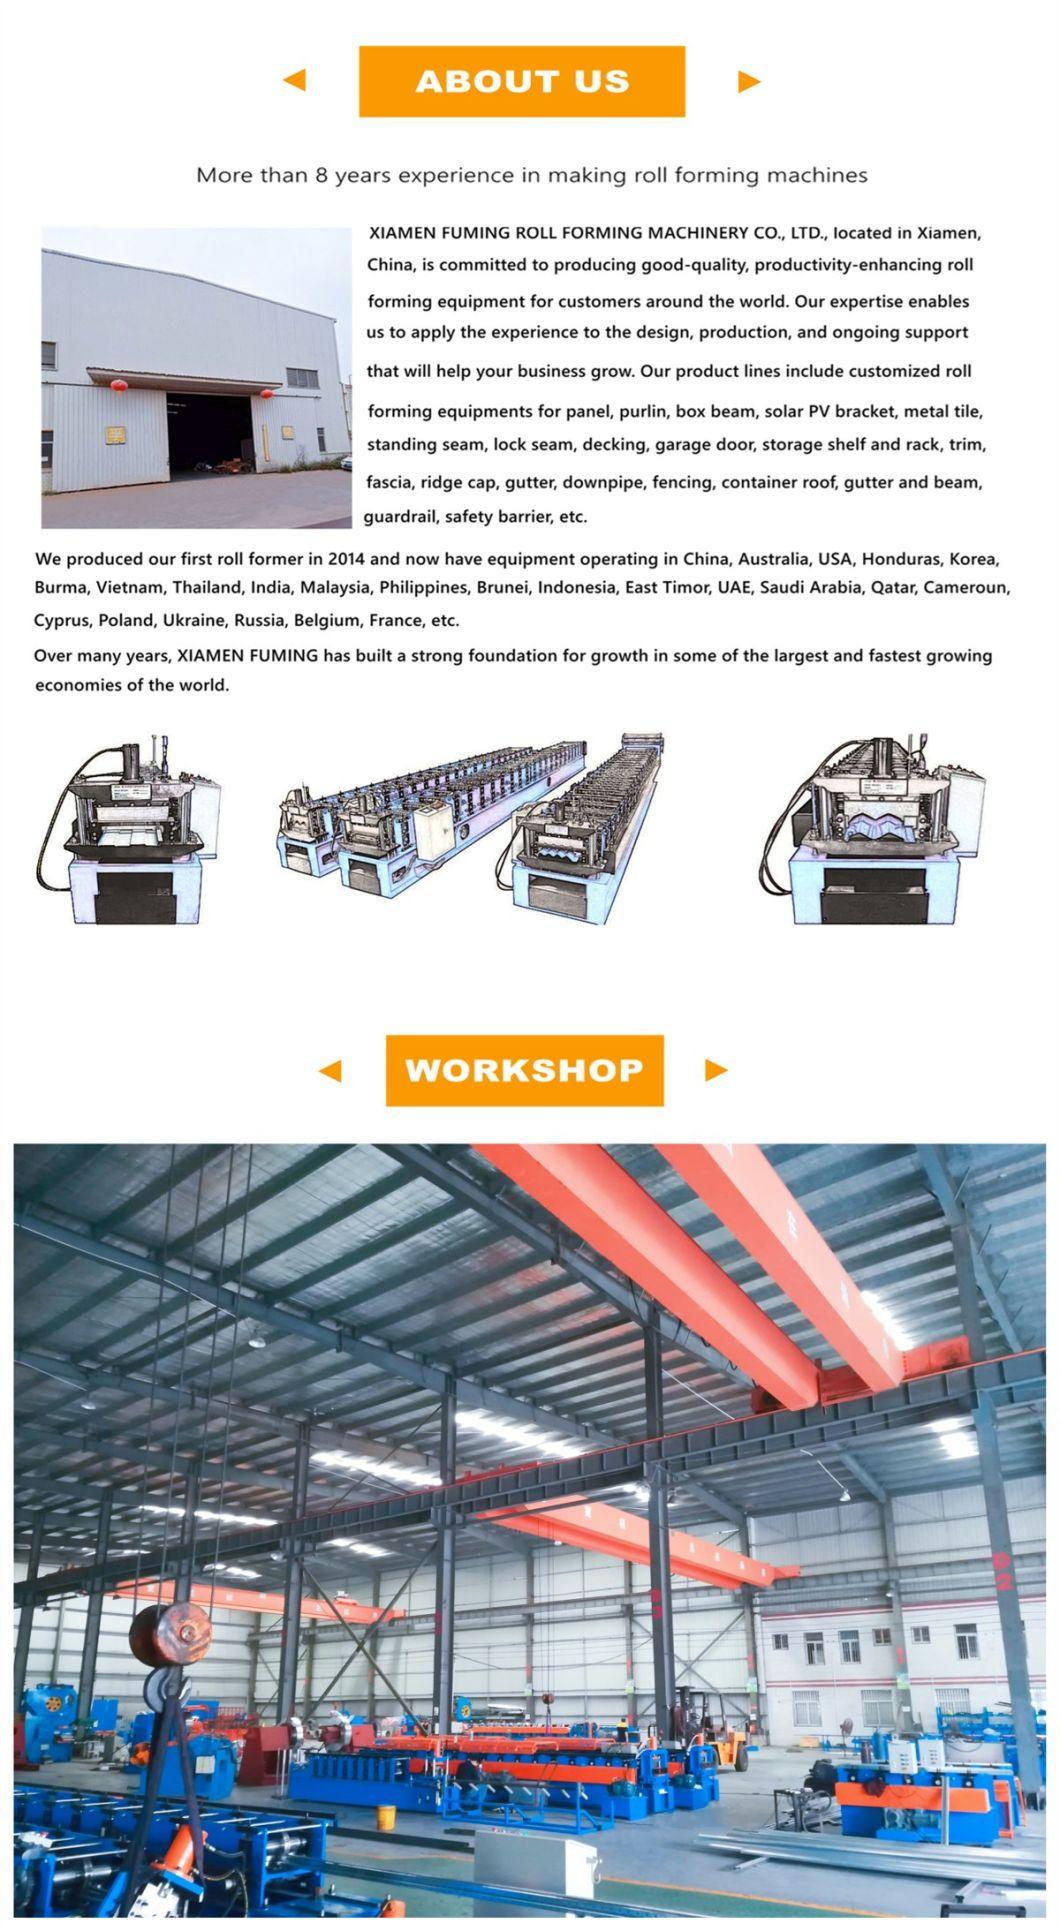 Roof Gear/Sprocket, Gear Box, Toroidal Worm Box Machine Roll Forming Machinery